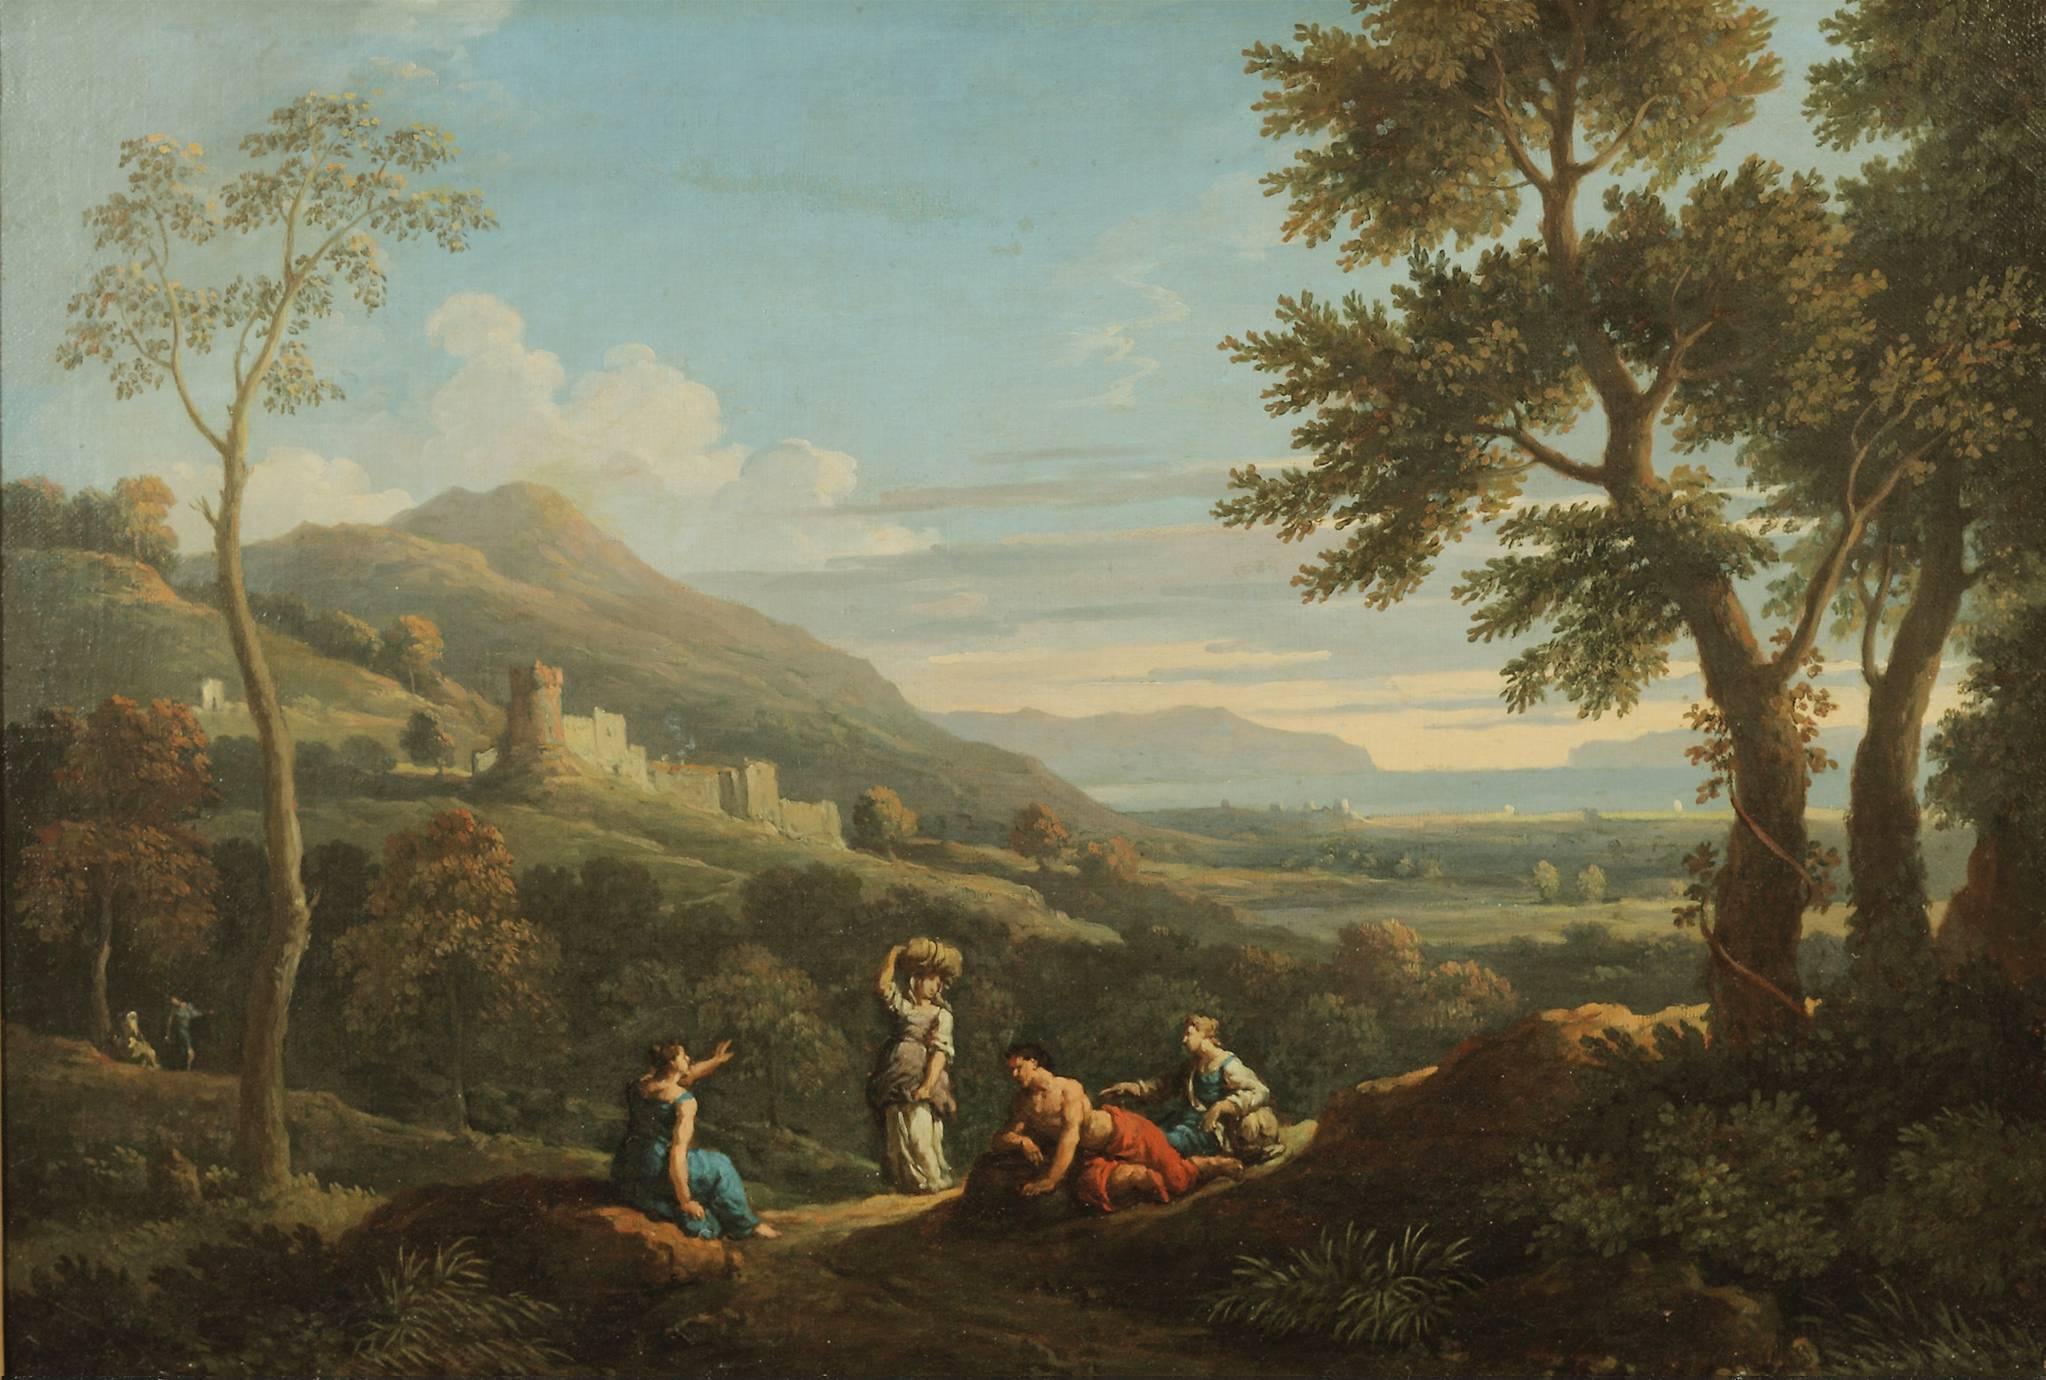 Landscape with Arcadian Figures - Painting by Jan Frans van Bloemen (Orizzonte)